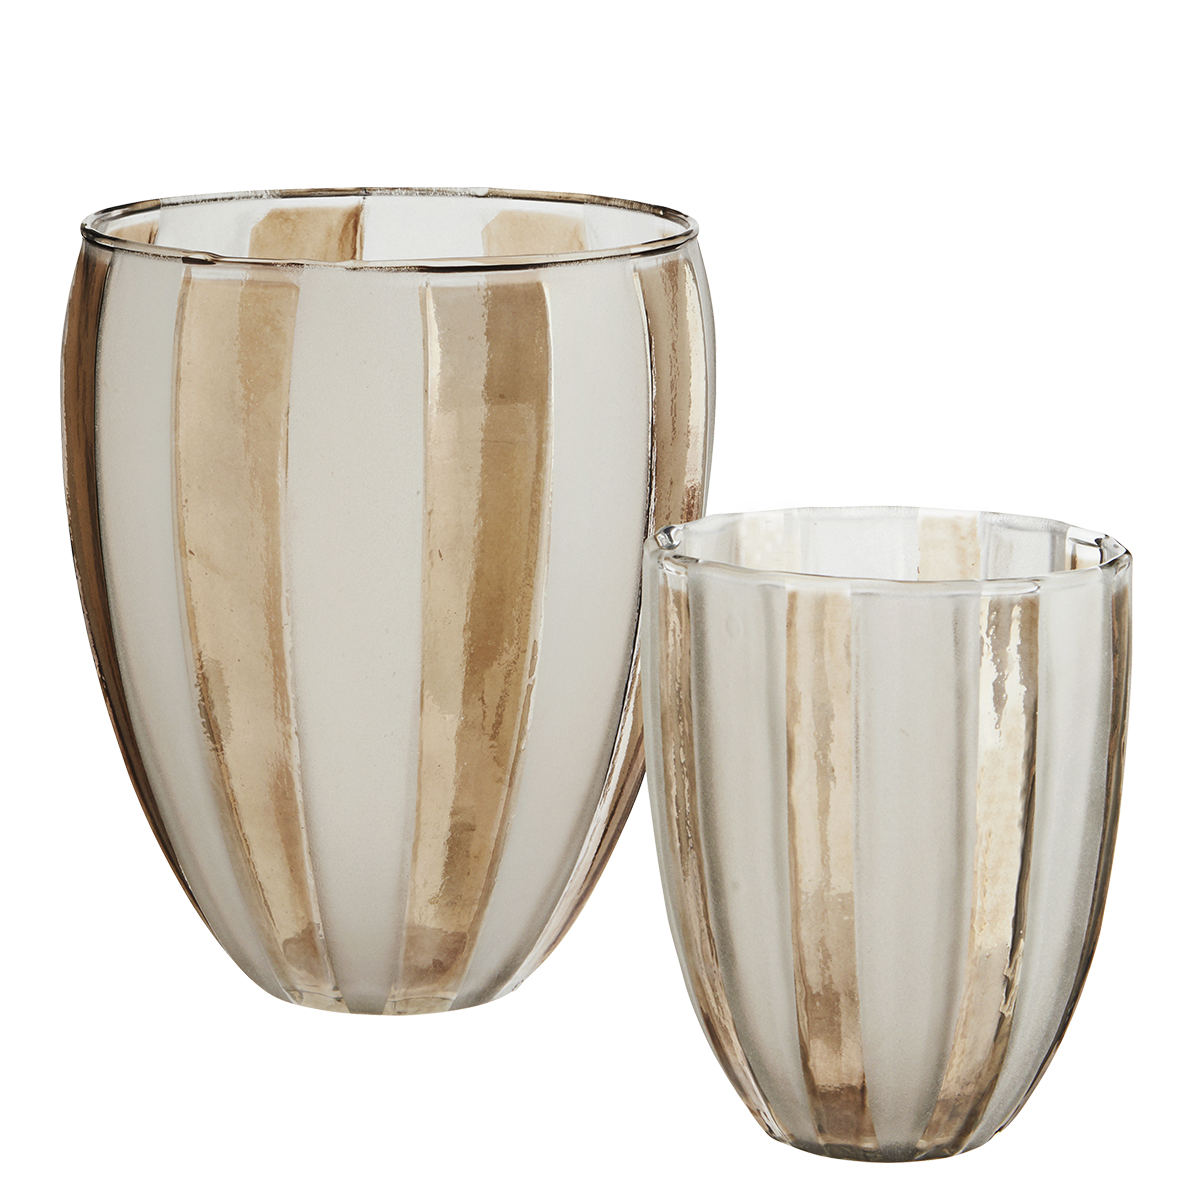 Striped glass vase